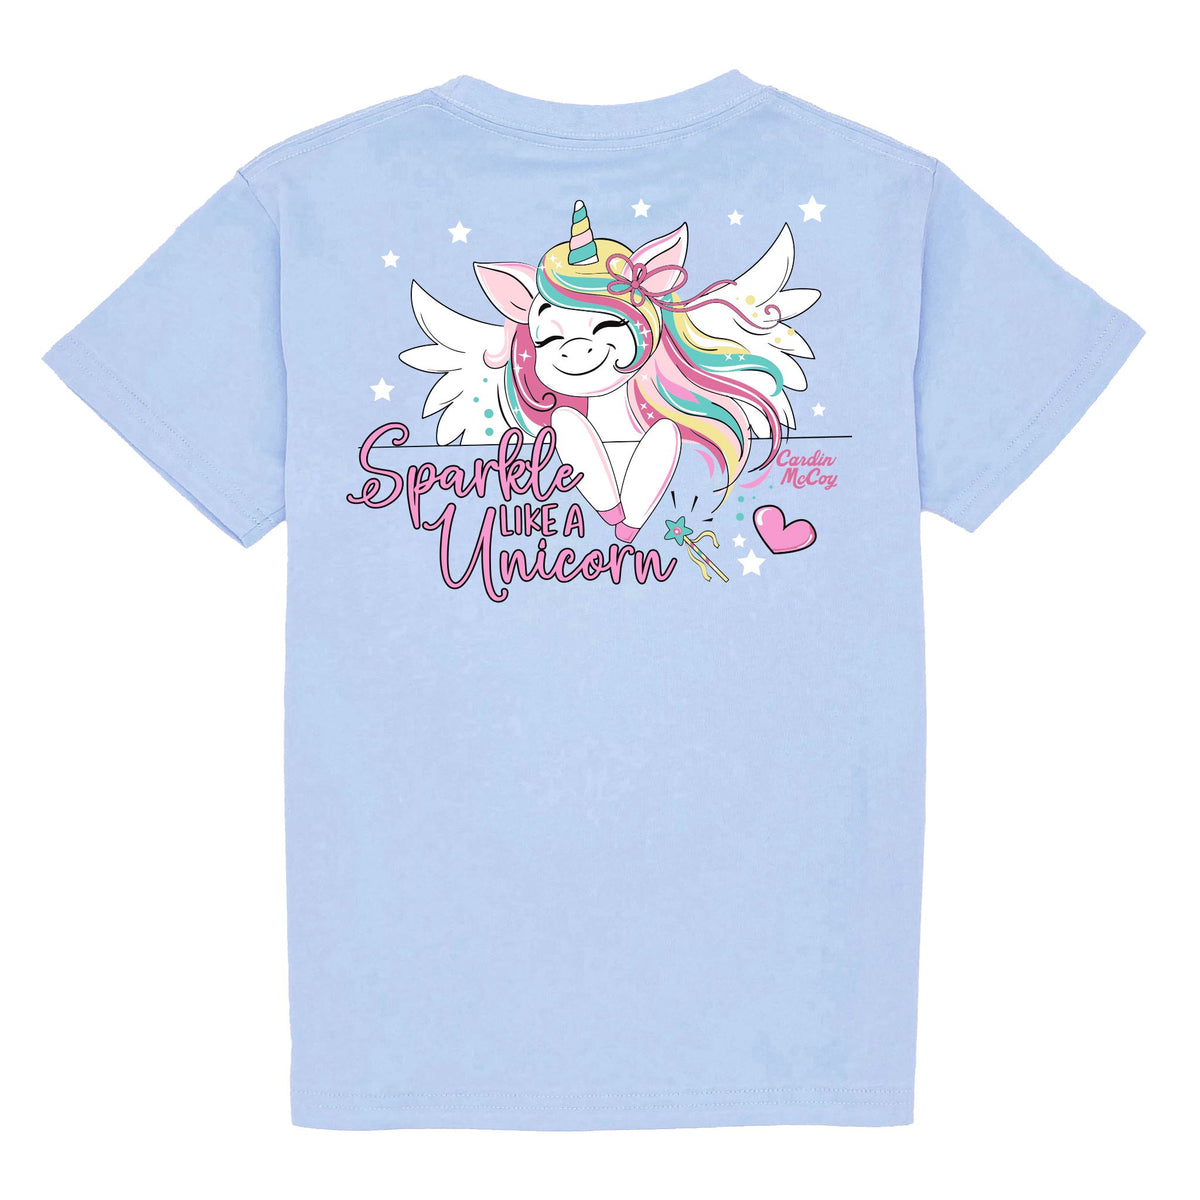 Kids' Sparkle Like a Unicorn Short Sleeve Tee Short Sleeve T-Shirt Cardin McCoy Light Blue XXS (2/3) No Pocket